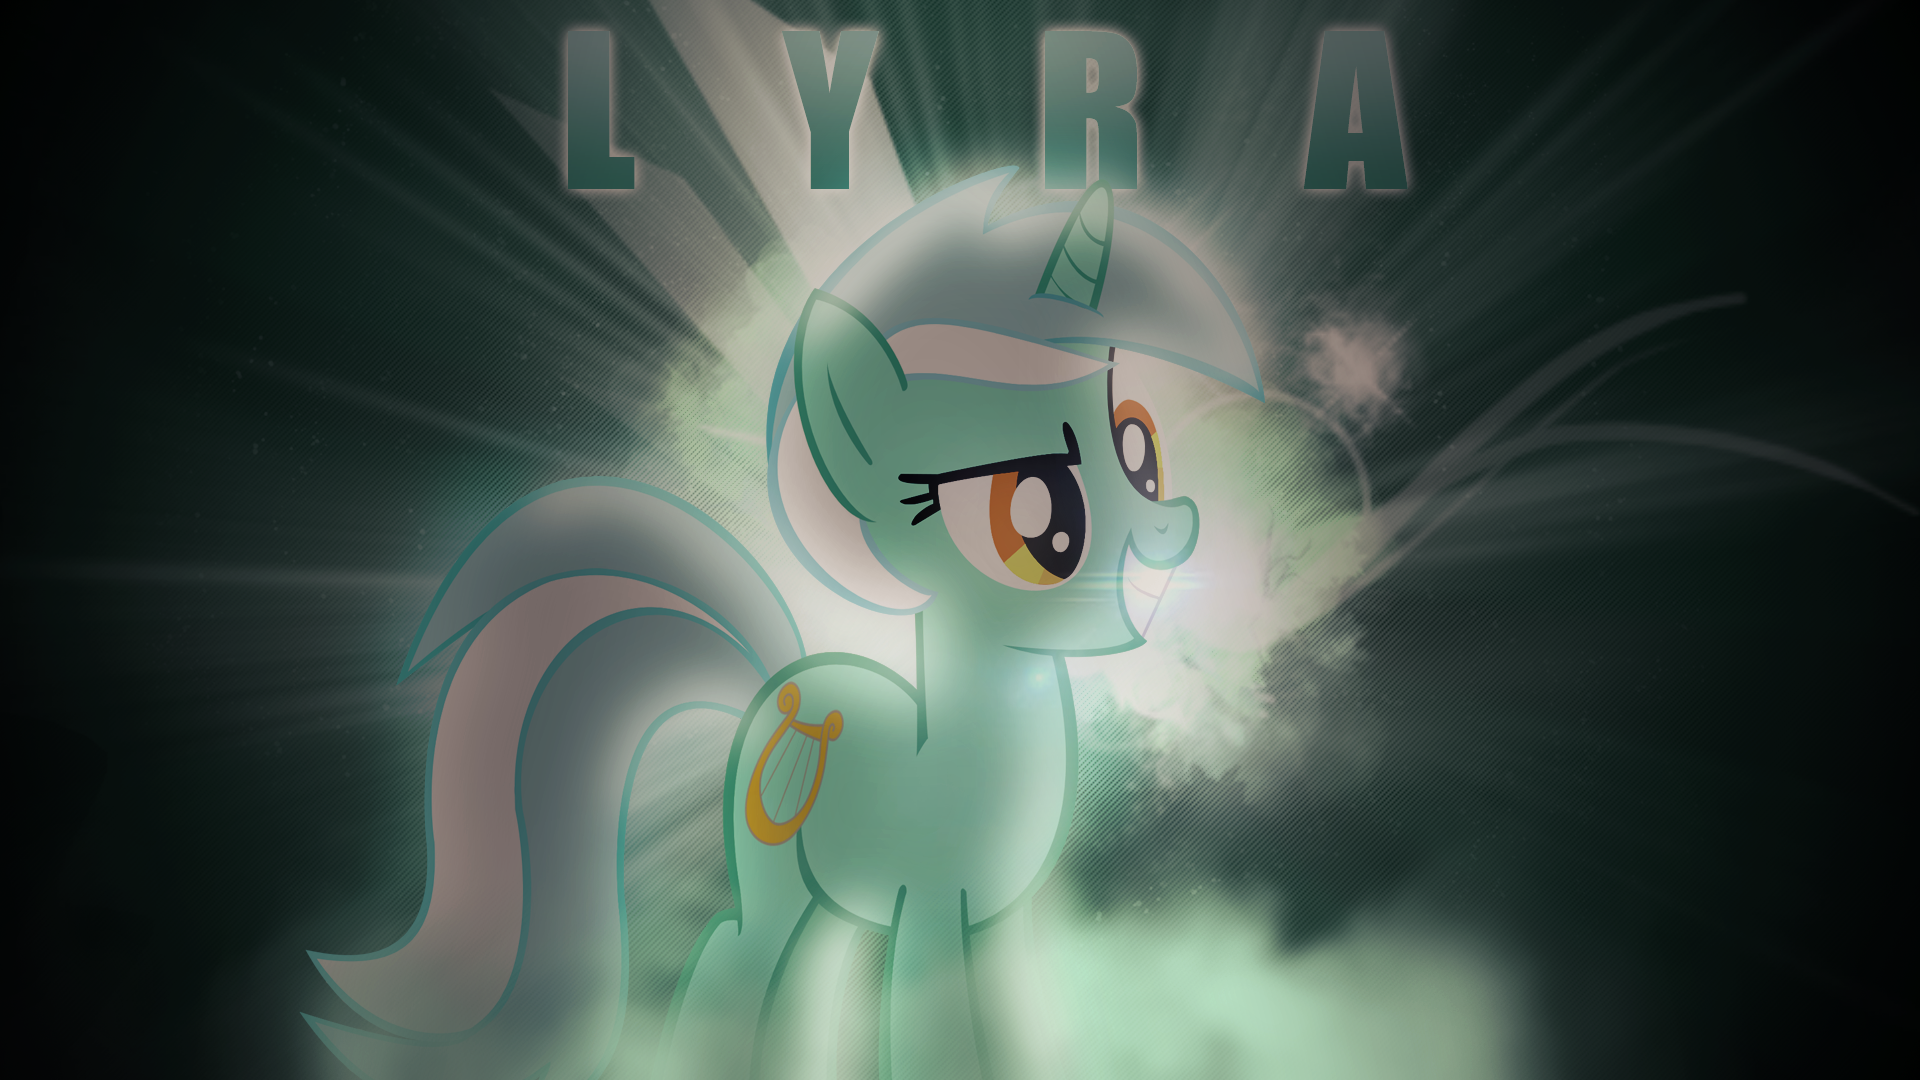 Lyra wallpaper by AAlegends and IamthegreatLyra